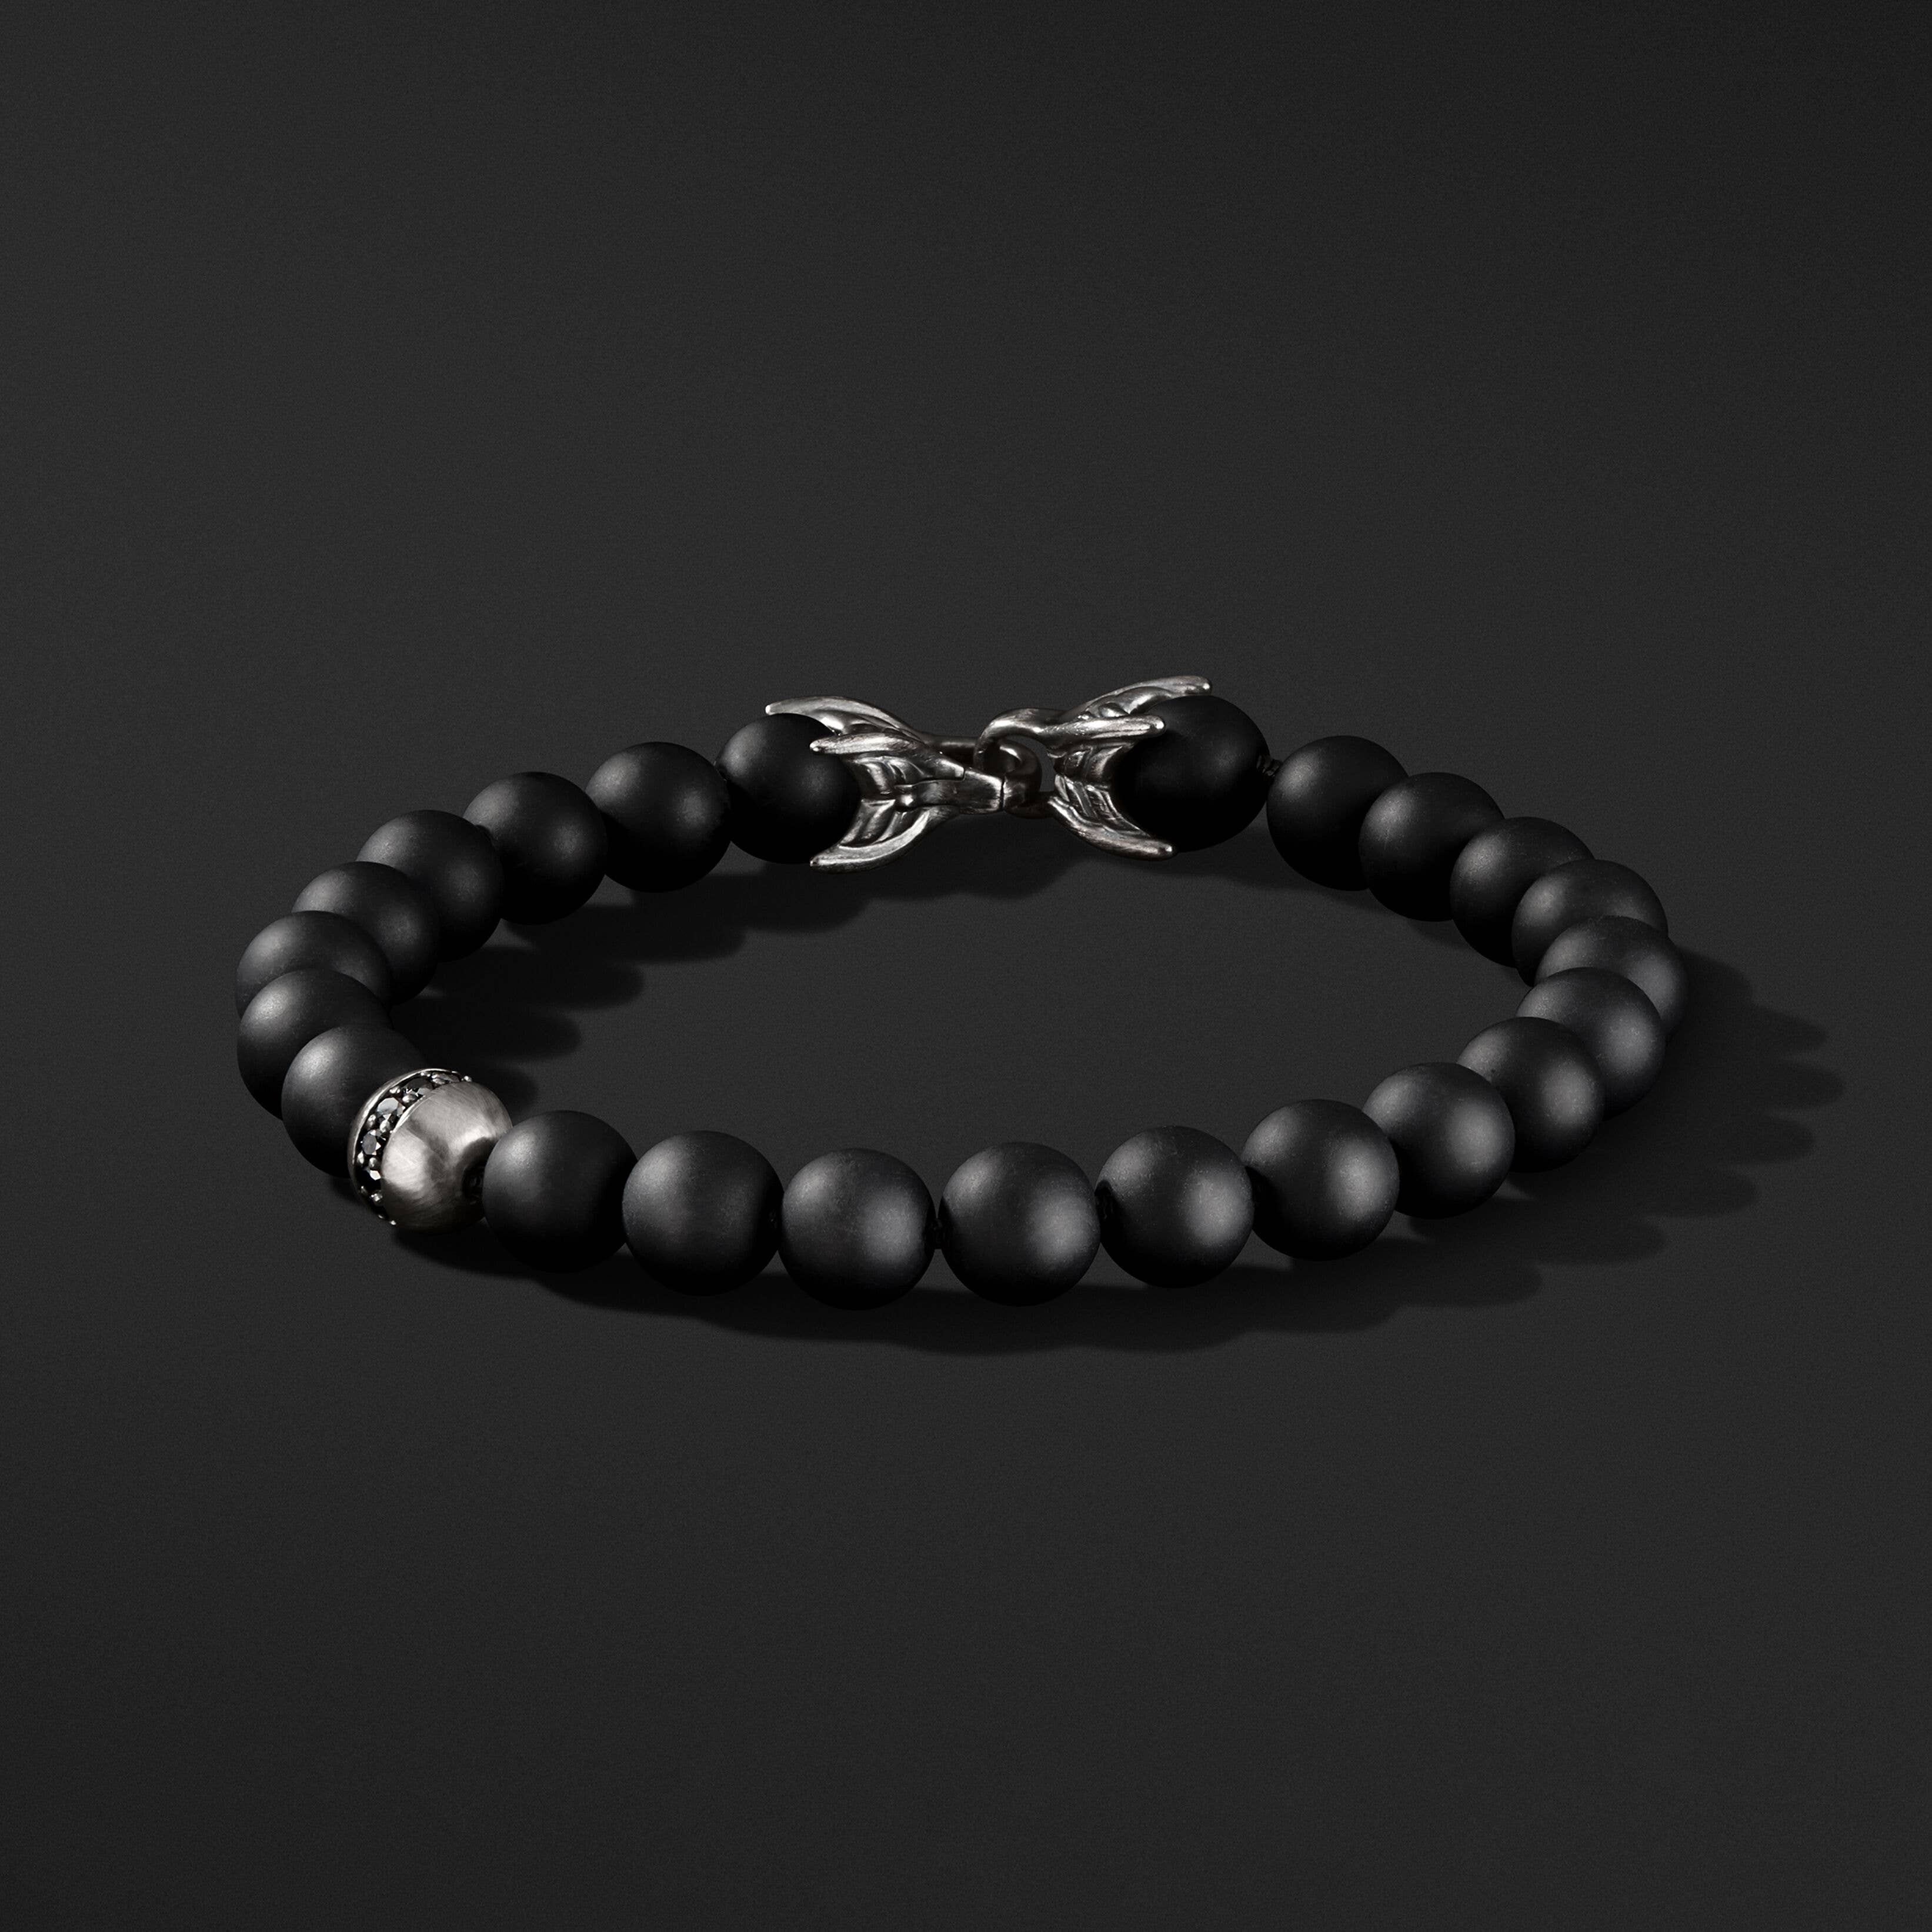 Spiritual Beads Bracelet with Black Onyx and Pavé Black Diamond Accent